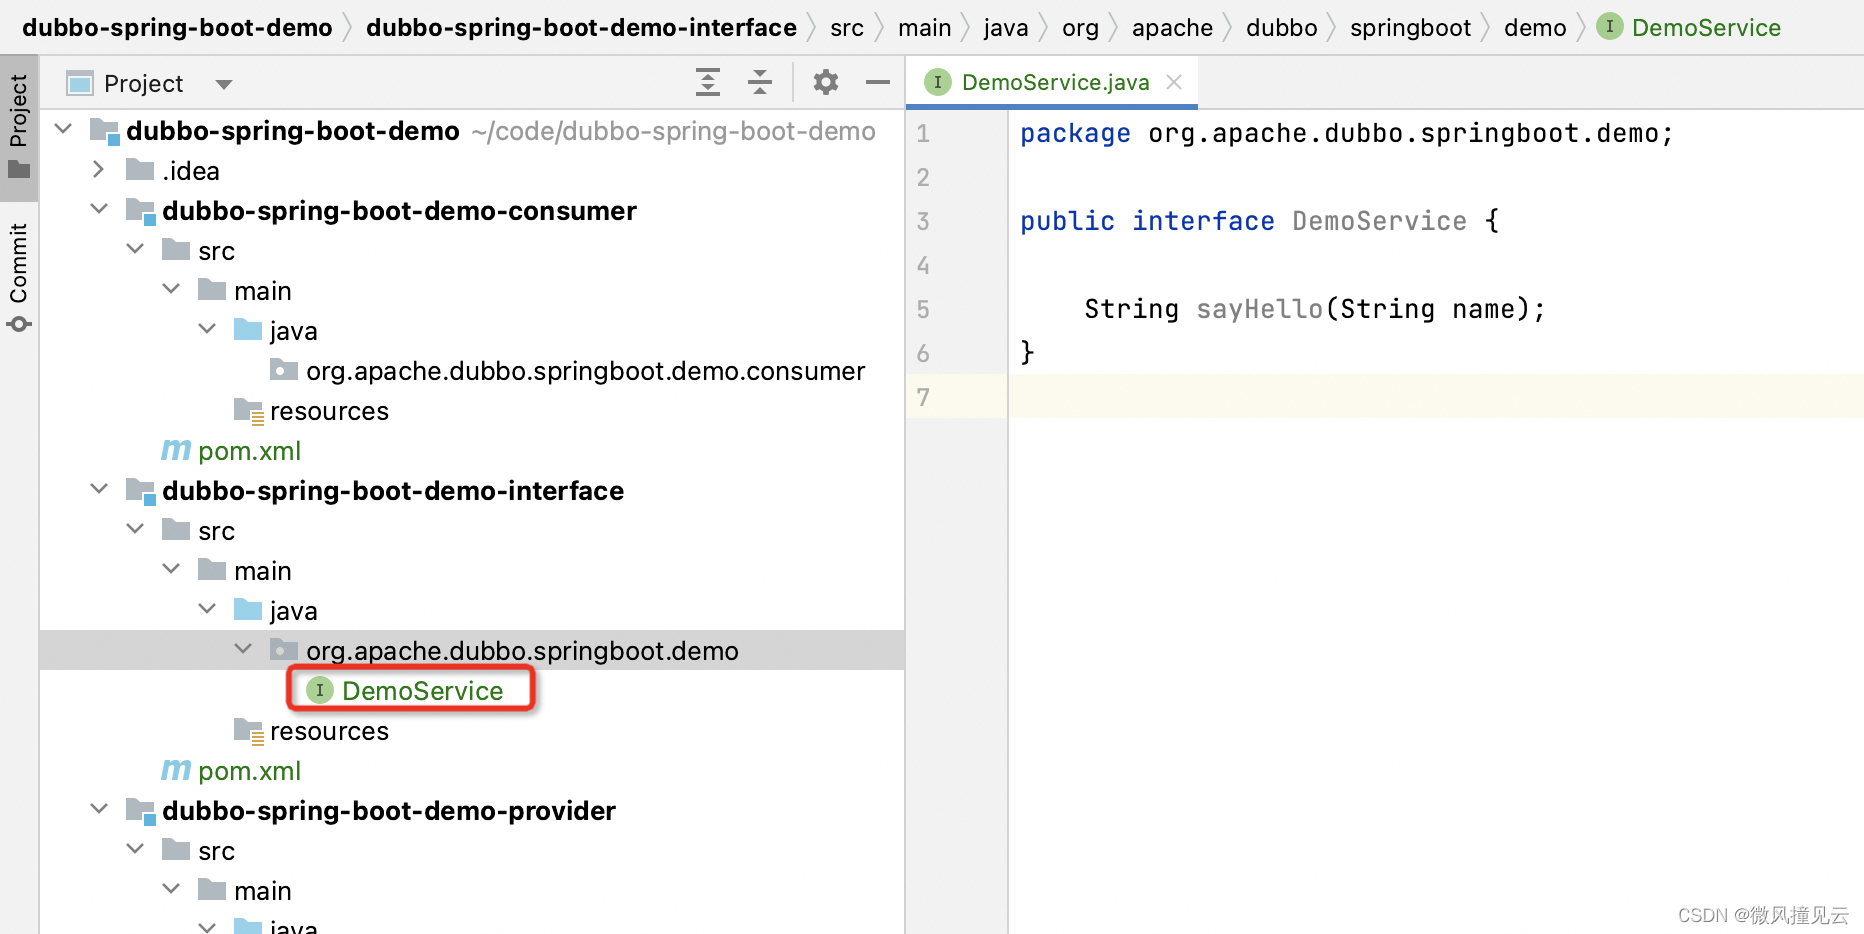 Dubbo快速入门 —— 基于SpringBoot Starter 开发微服务应用案例 + 知识讲解（中）